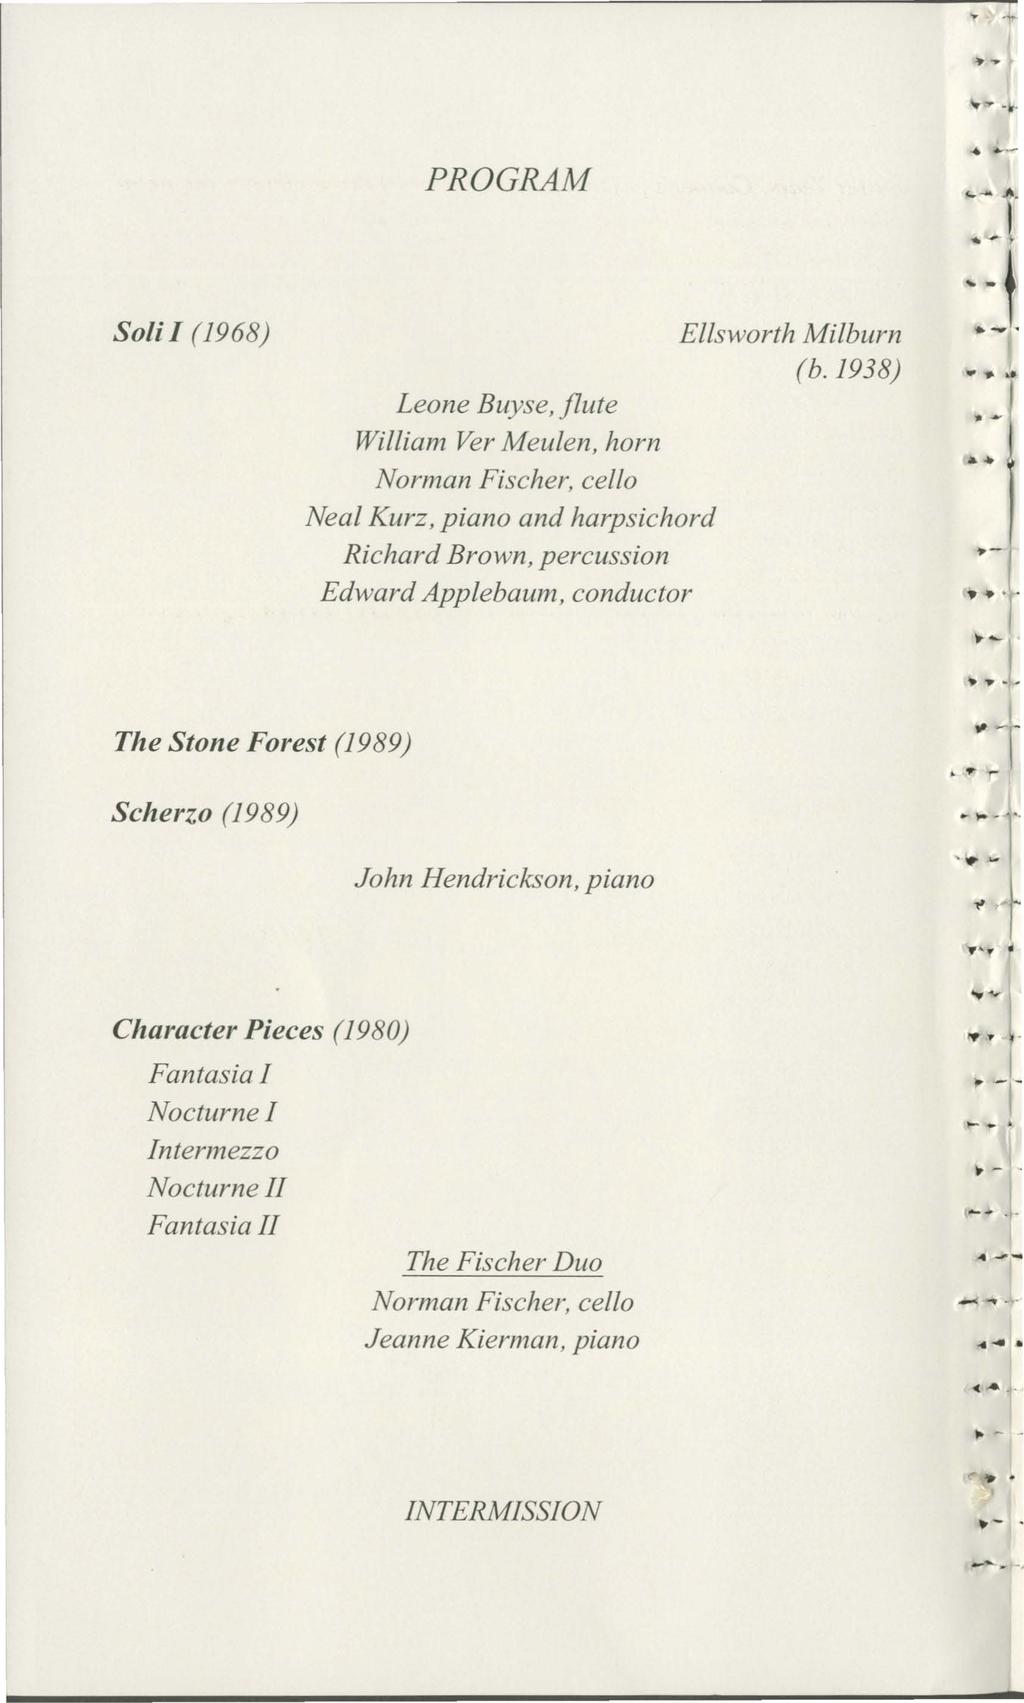 Solil (1968) PROGRAM Leone Buyse, flute William Ver Meulen, horn Norman Fischer, cello Neal Kurz, piano and harpsichord Richard Brown, percussion Edward Applebaum, conductor Ellsworth Milburn (b.